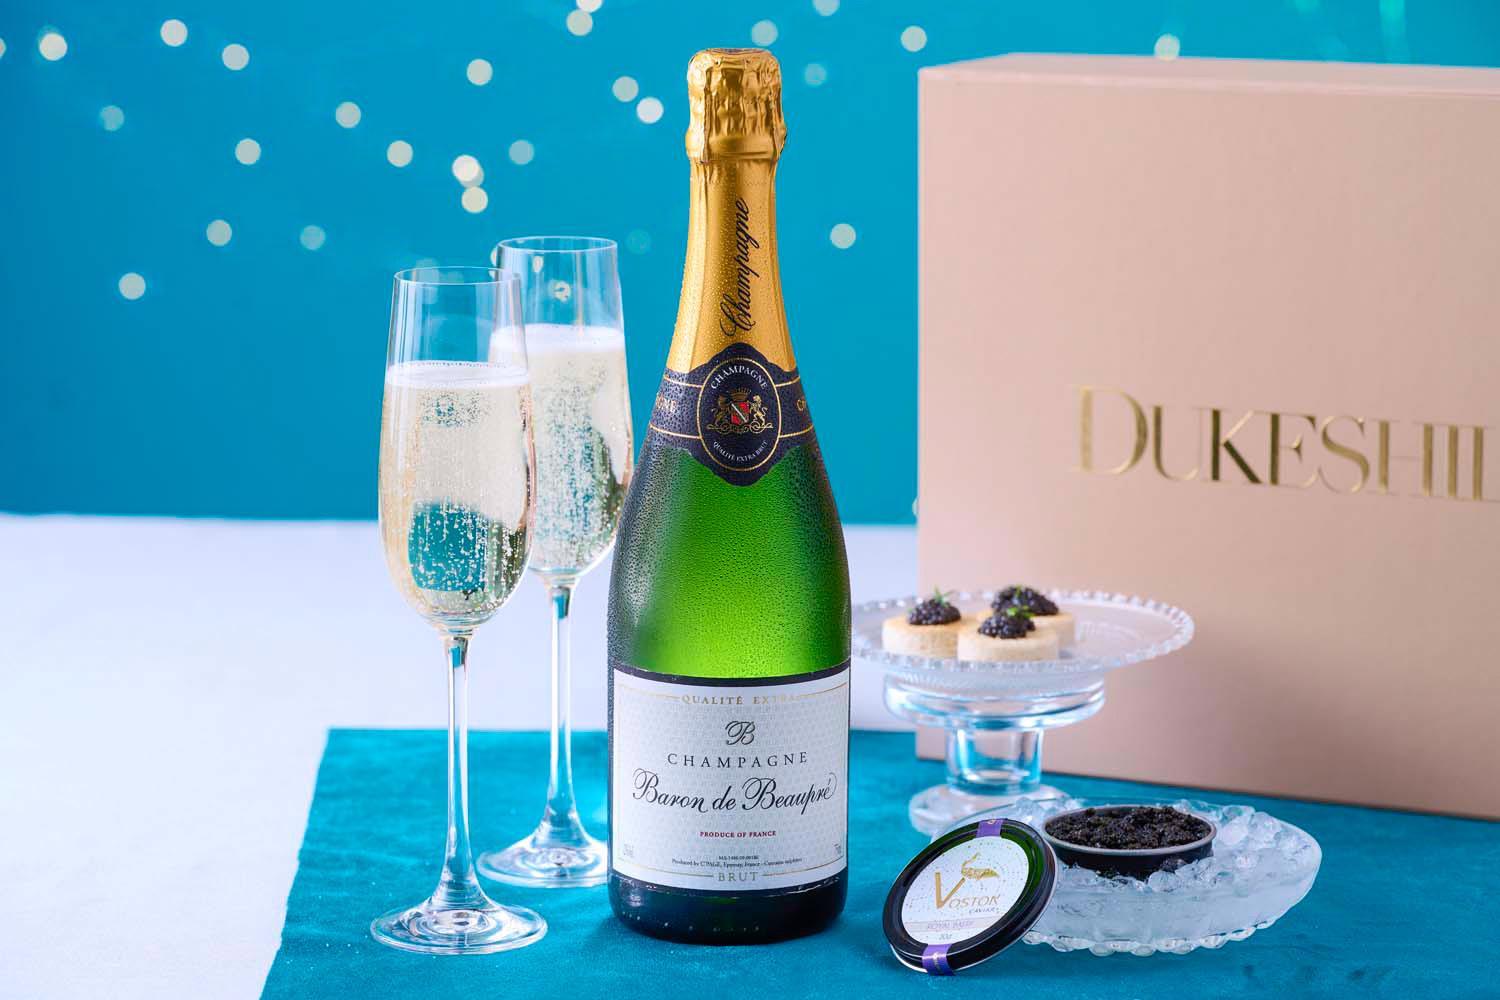 Royal Baerii Caviar & Baron de Beaupre Champagne Brut - DukesHill